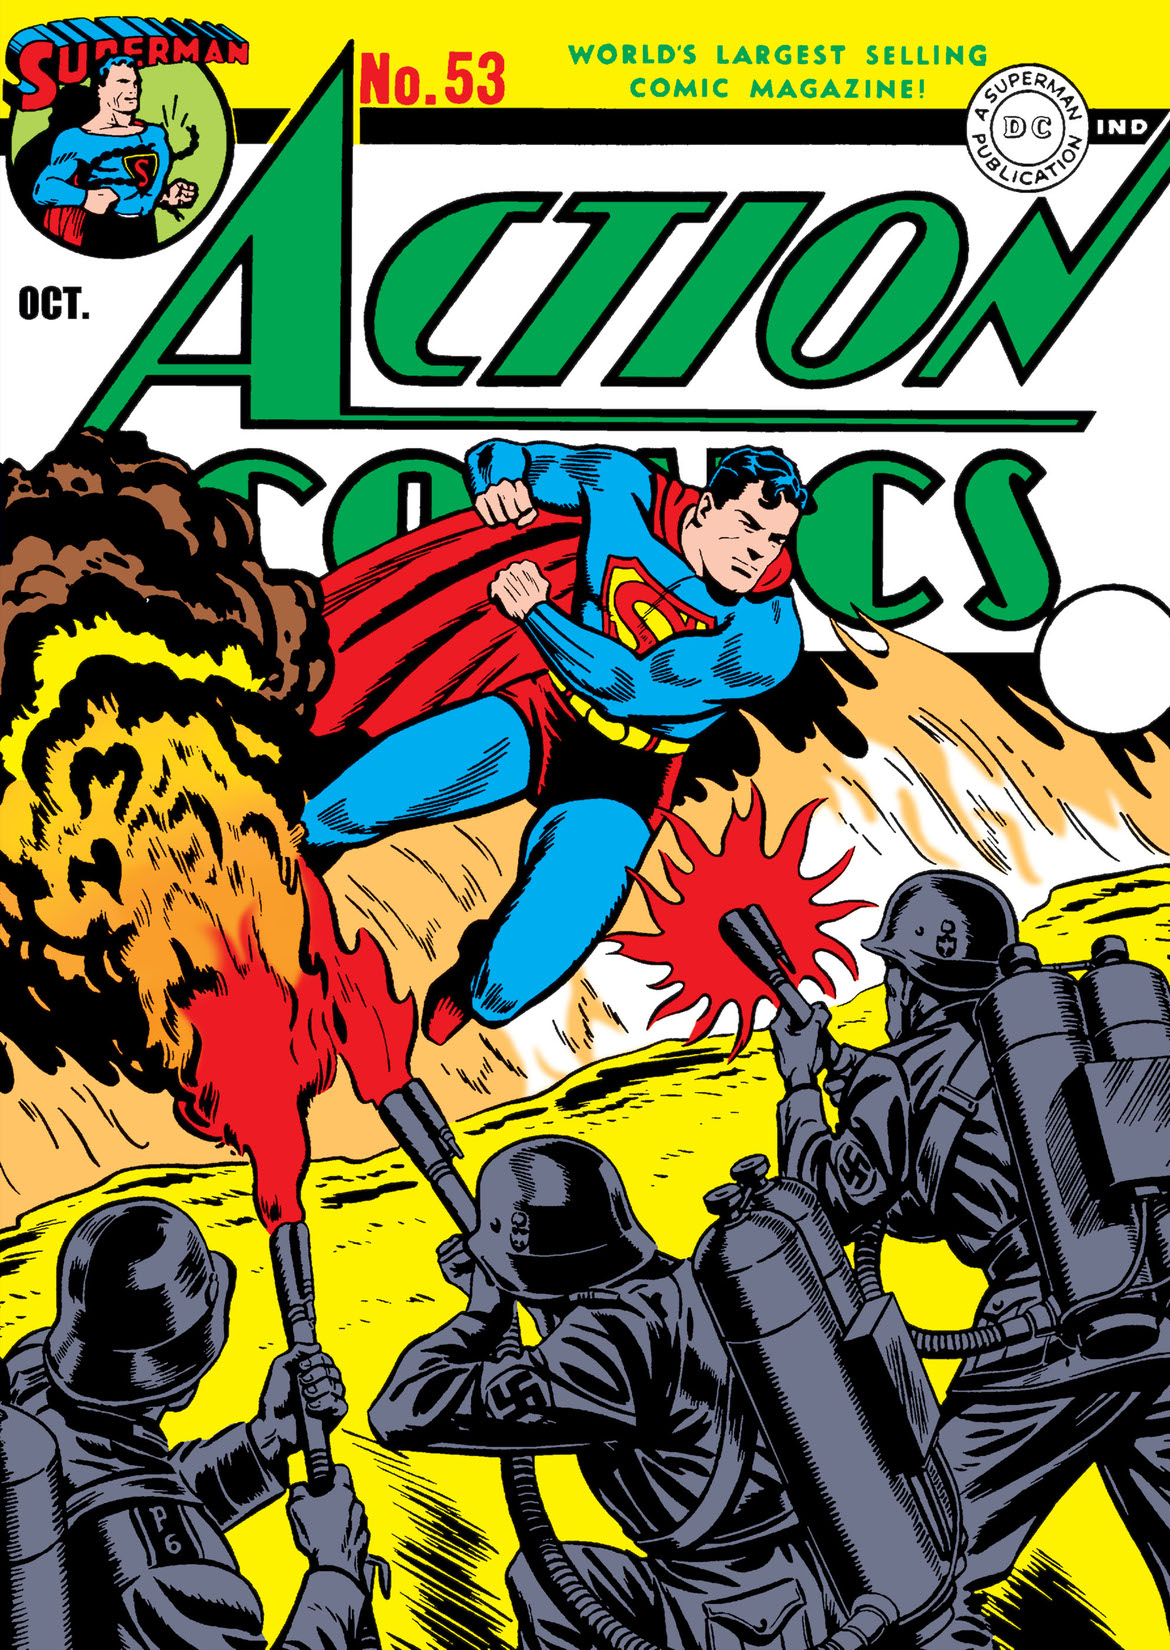 Action Comics (1938-) #53 preview images